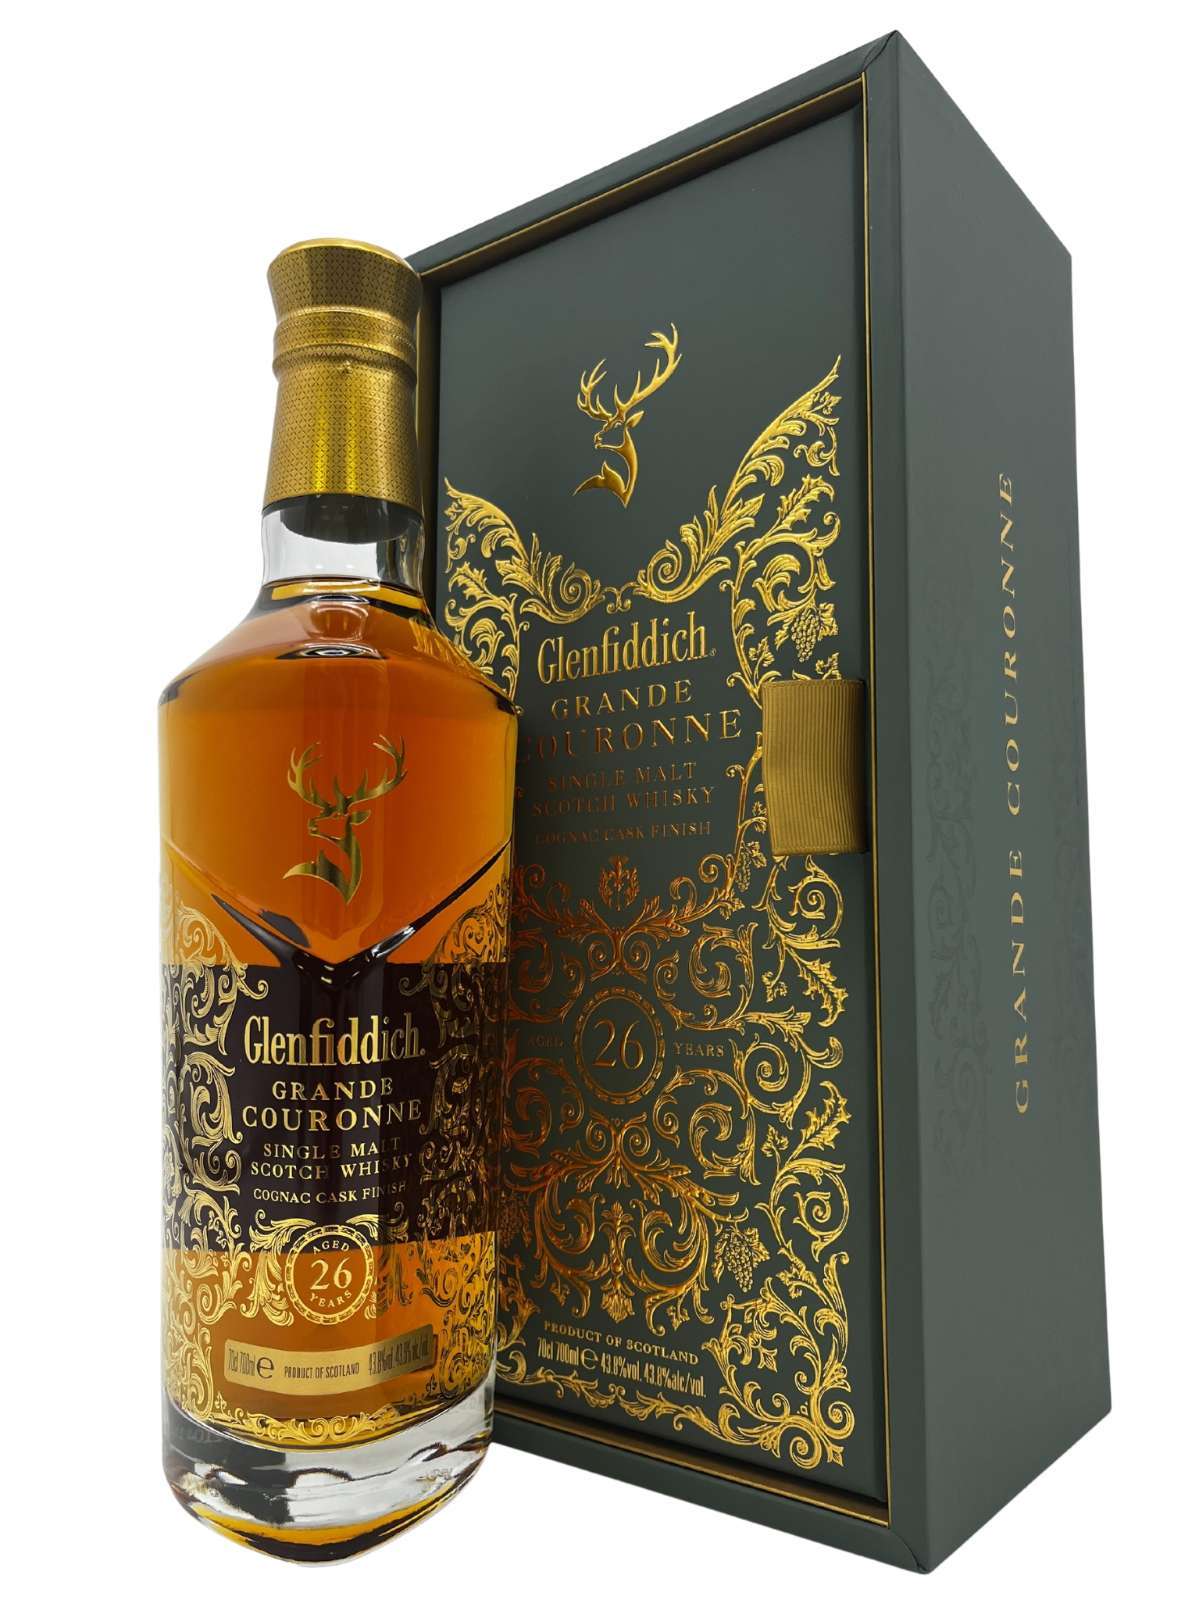 Glenfiddich 26 Year Old Grande Couronne Single Malt Scotch Whisky